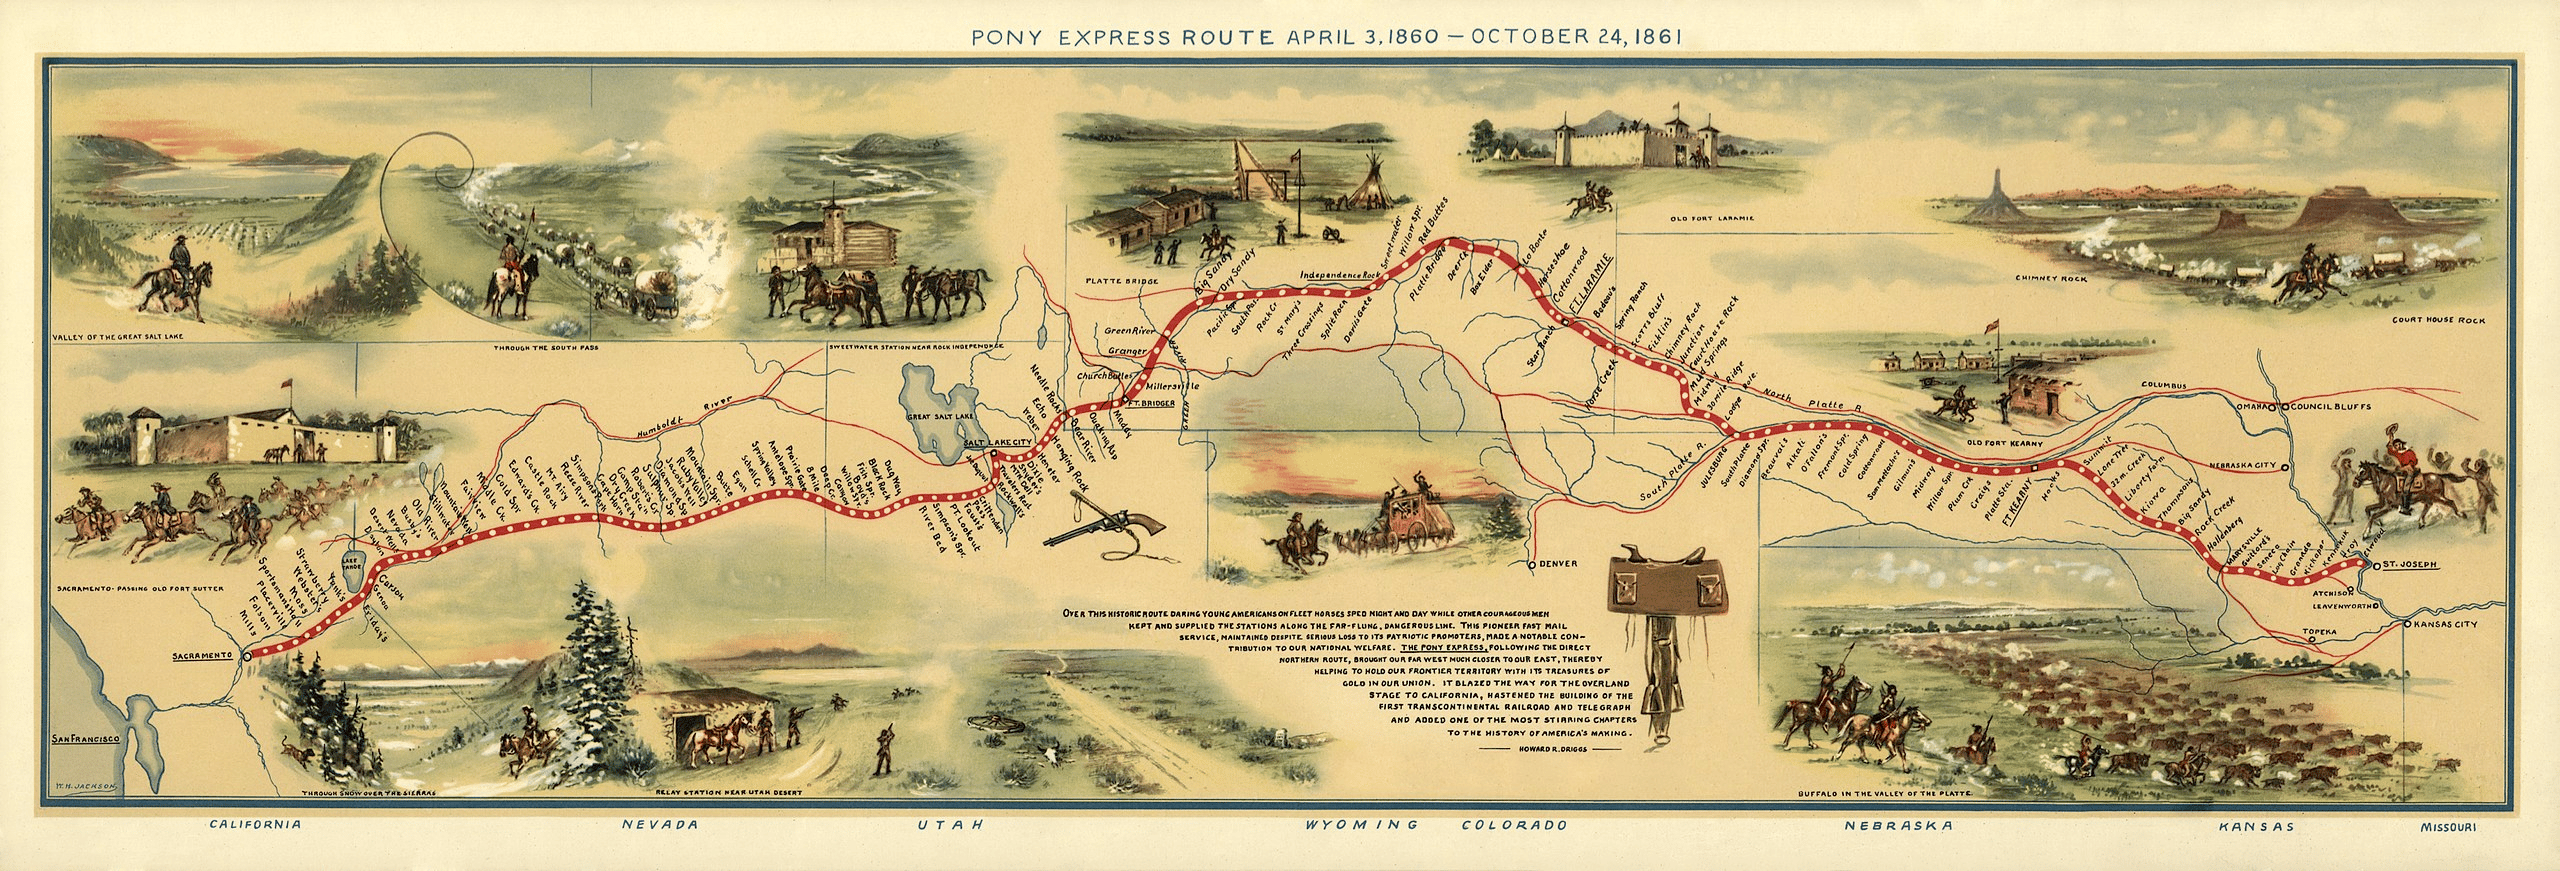 Pony Express Map by William Henry Jackson